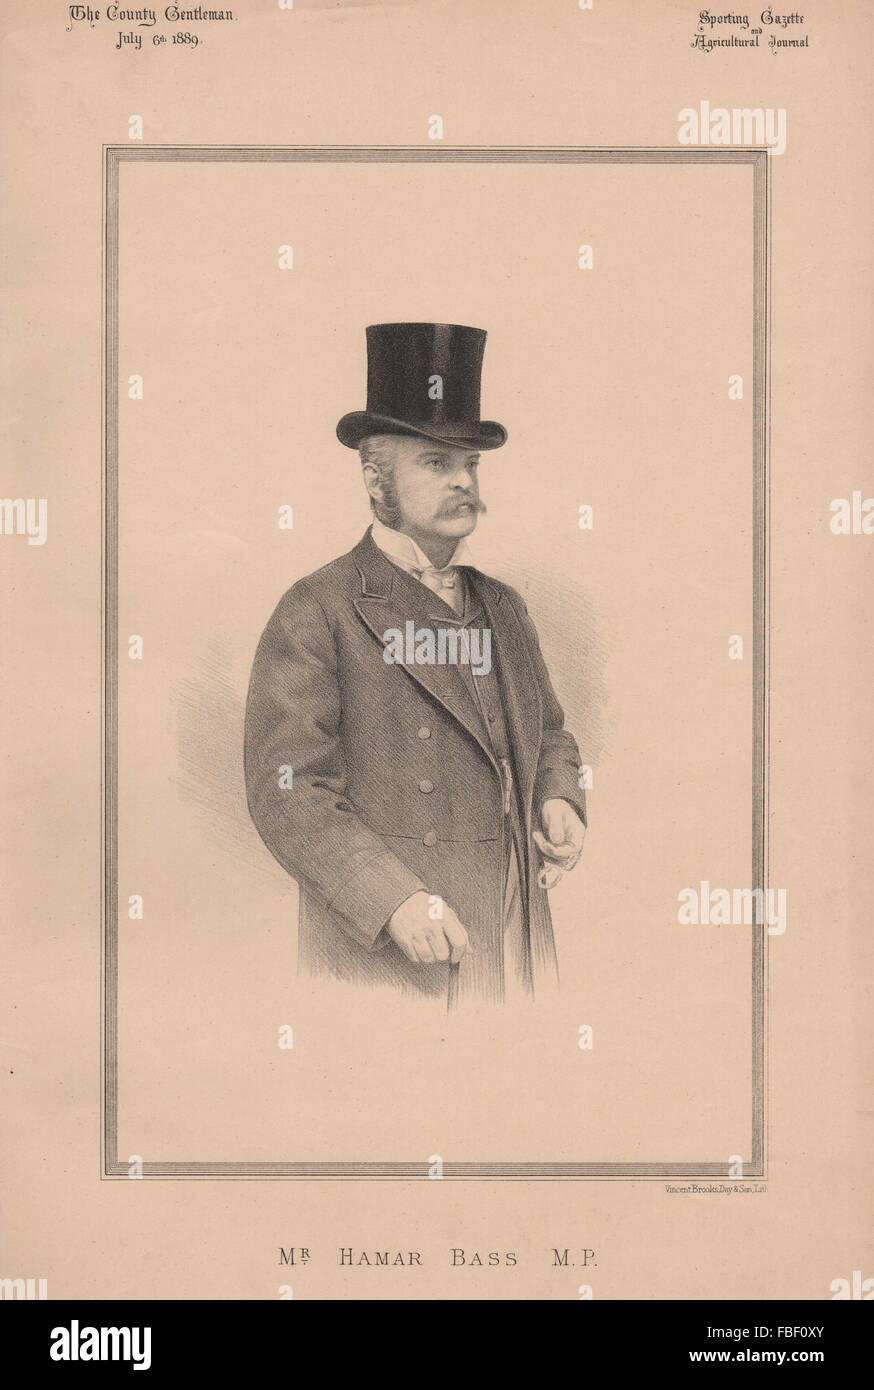 Mr. Hamar Bass M.P, antique print 1889 Stock Photo